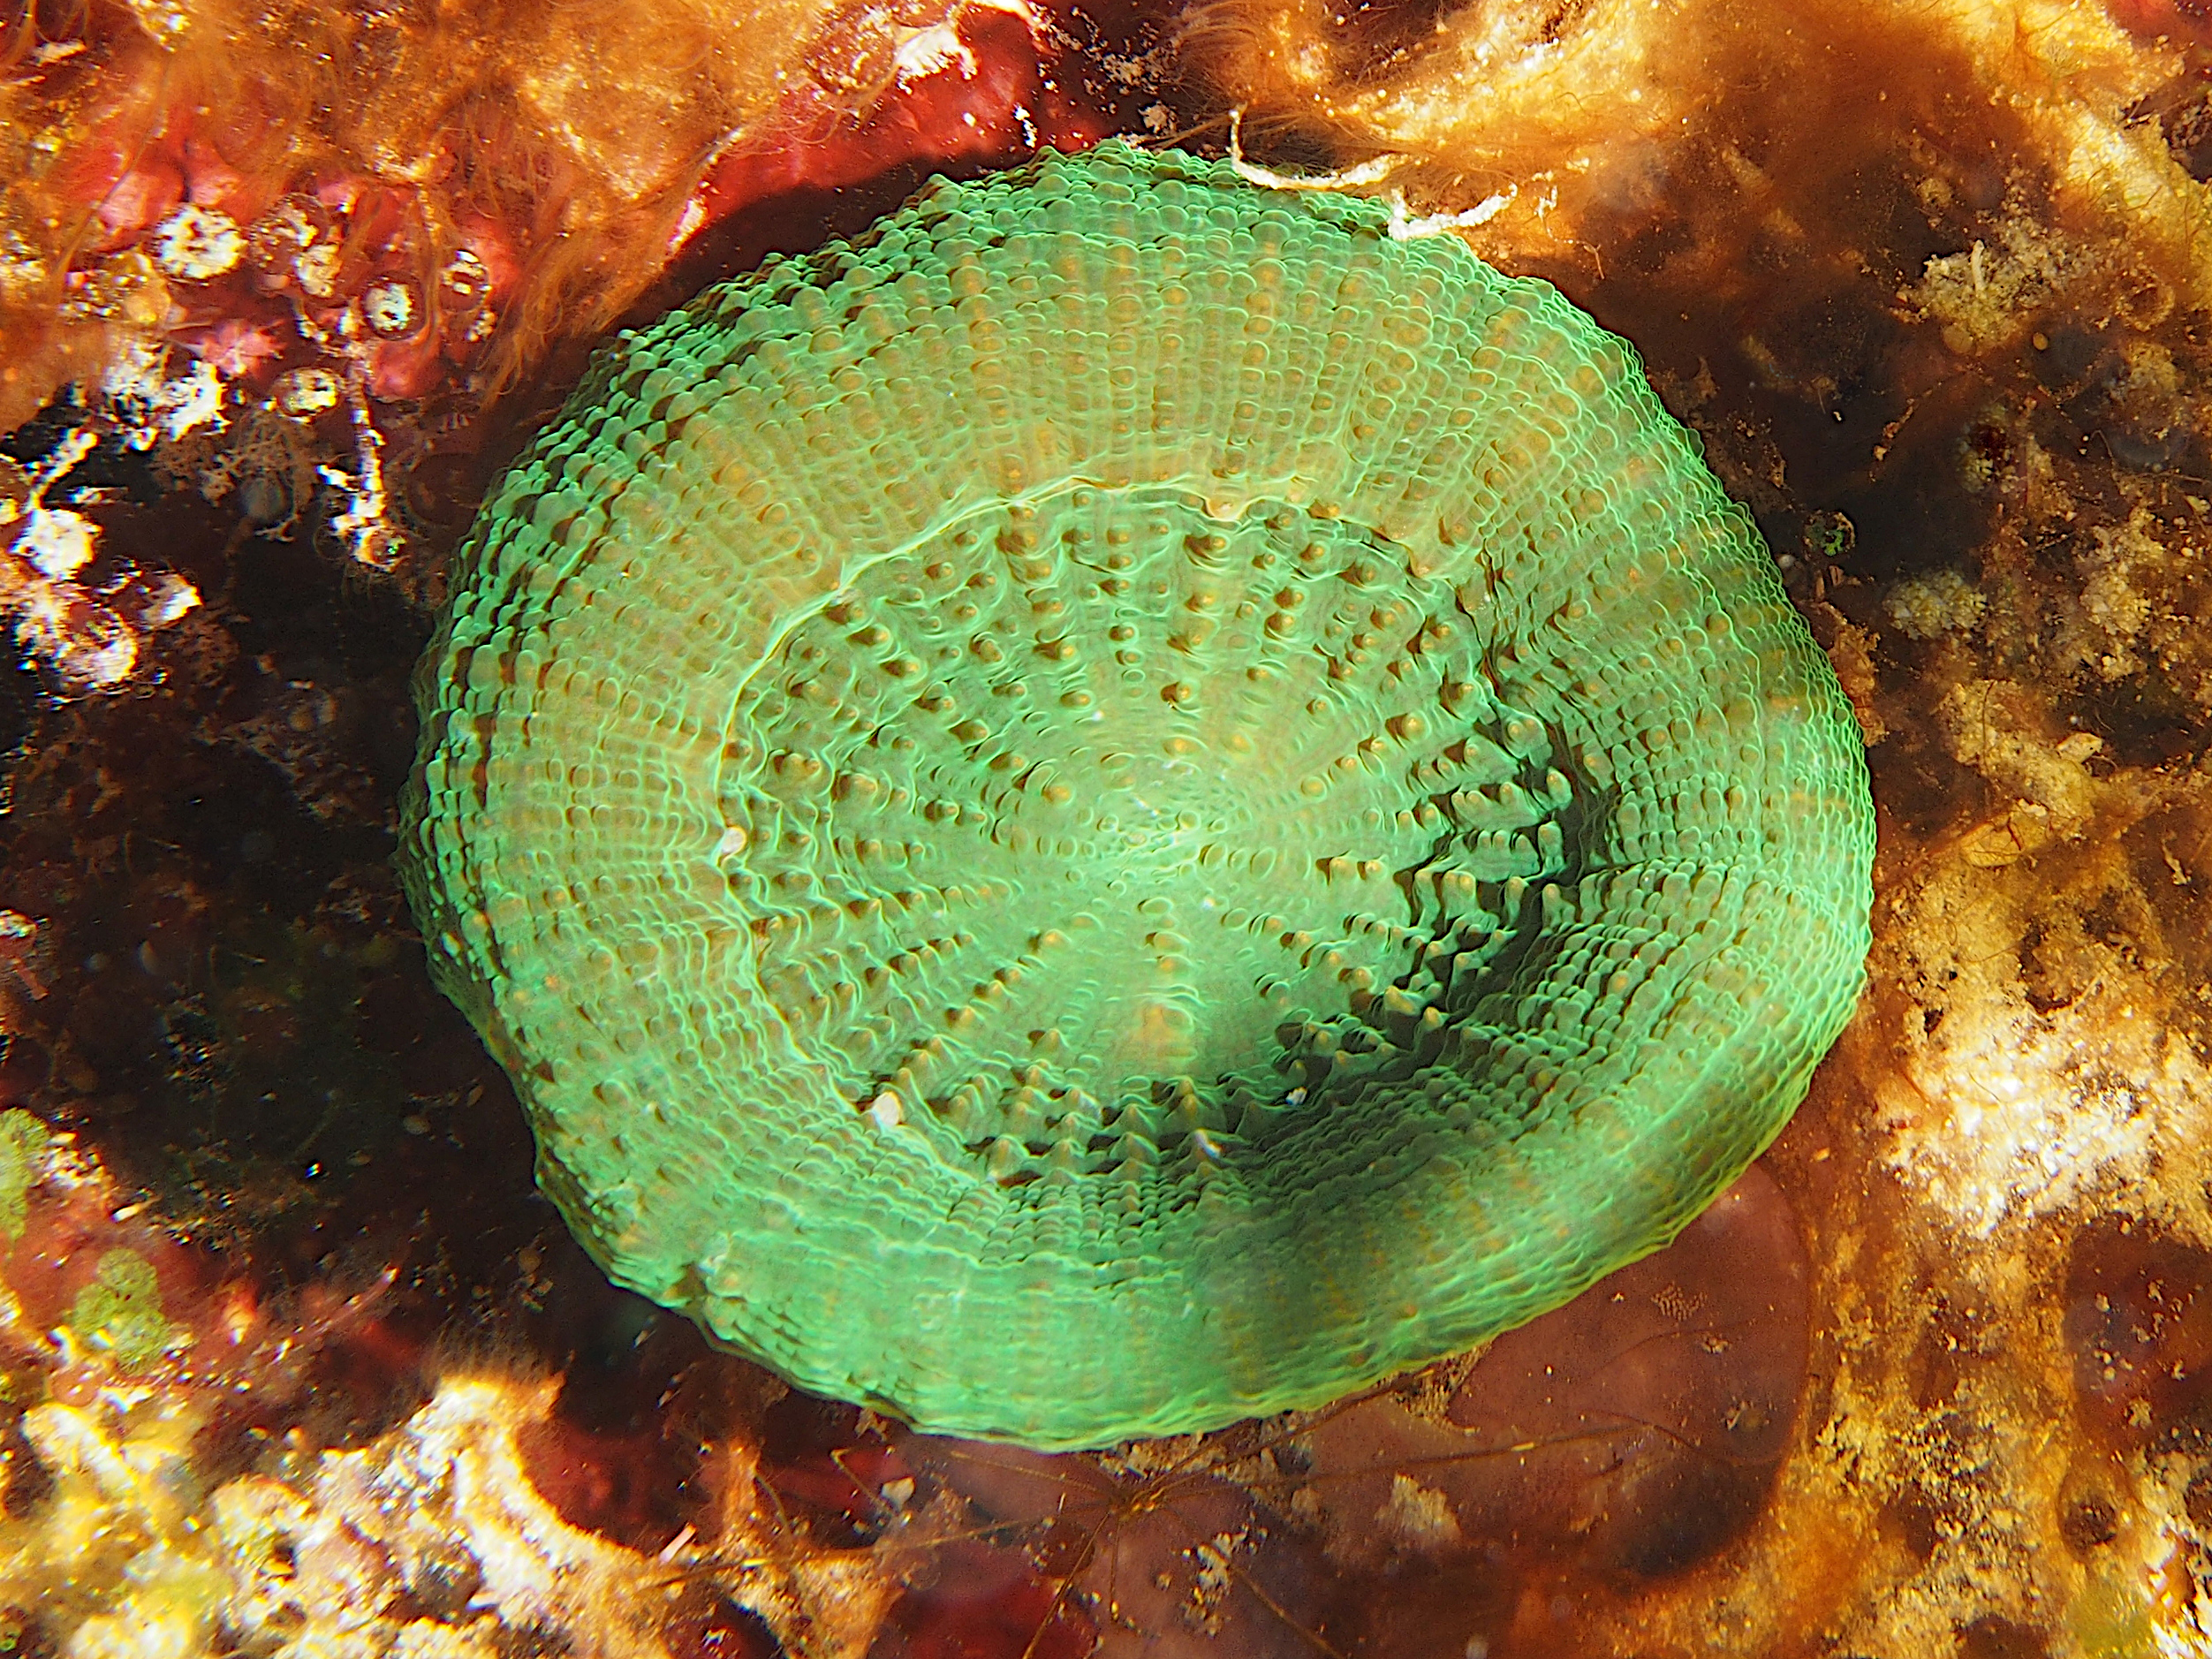 Artichoke/Solitary Disk Coral - Scolymia cubensis/wellsi